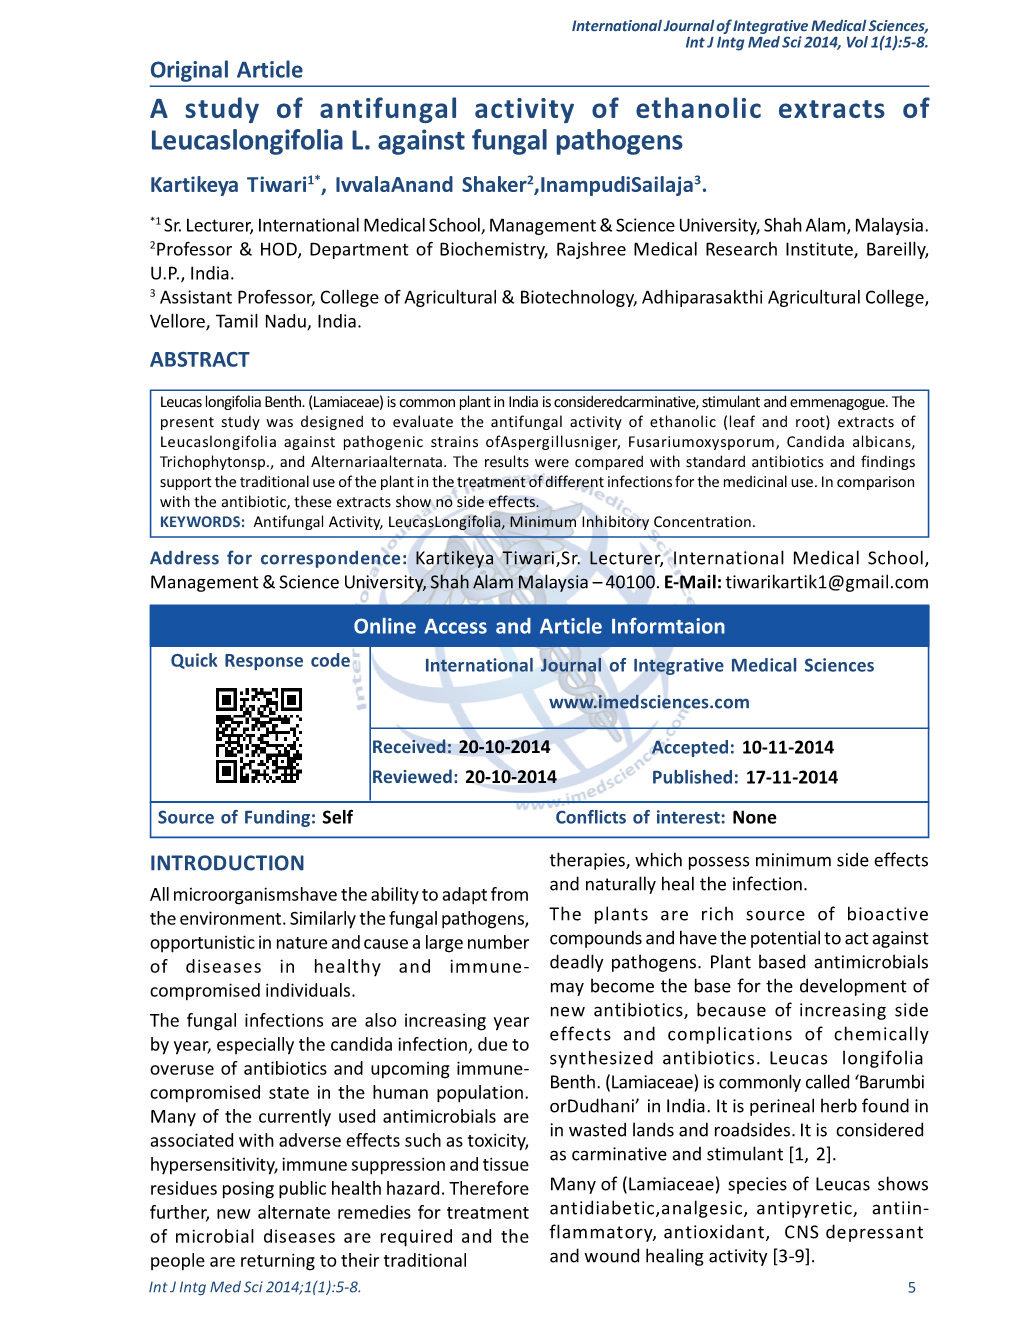 A Study of Antifungal Activity of Ethanolic Extracts of Leucaslongifolia L